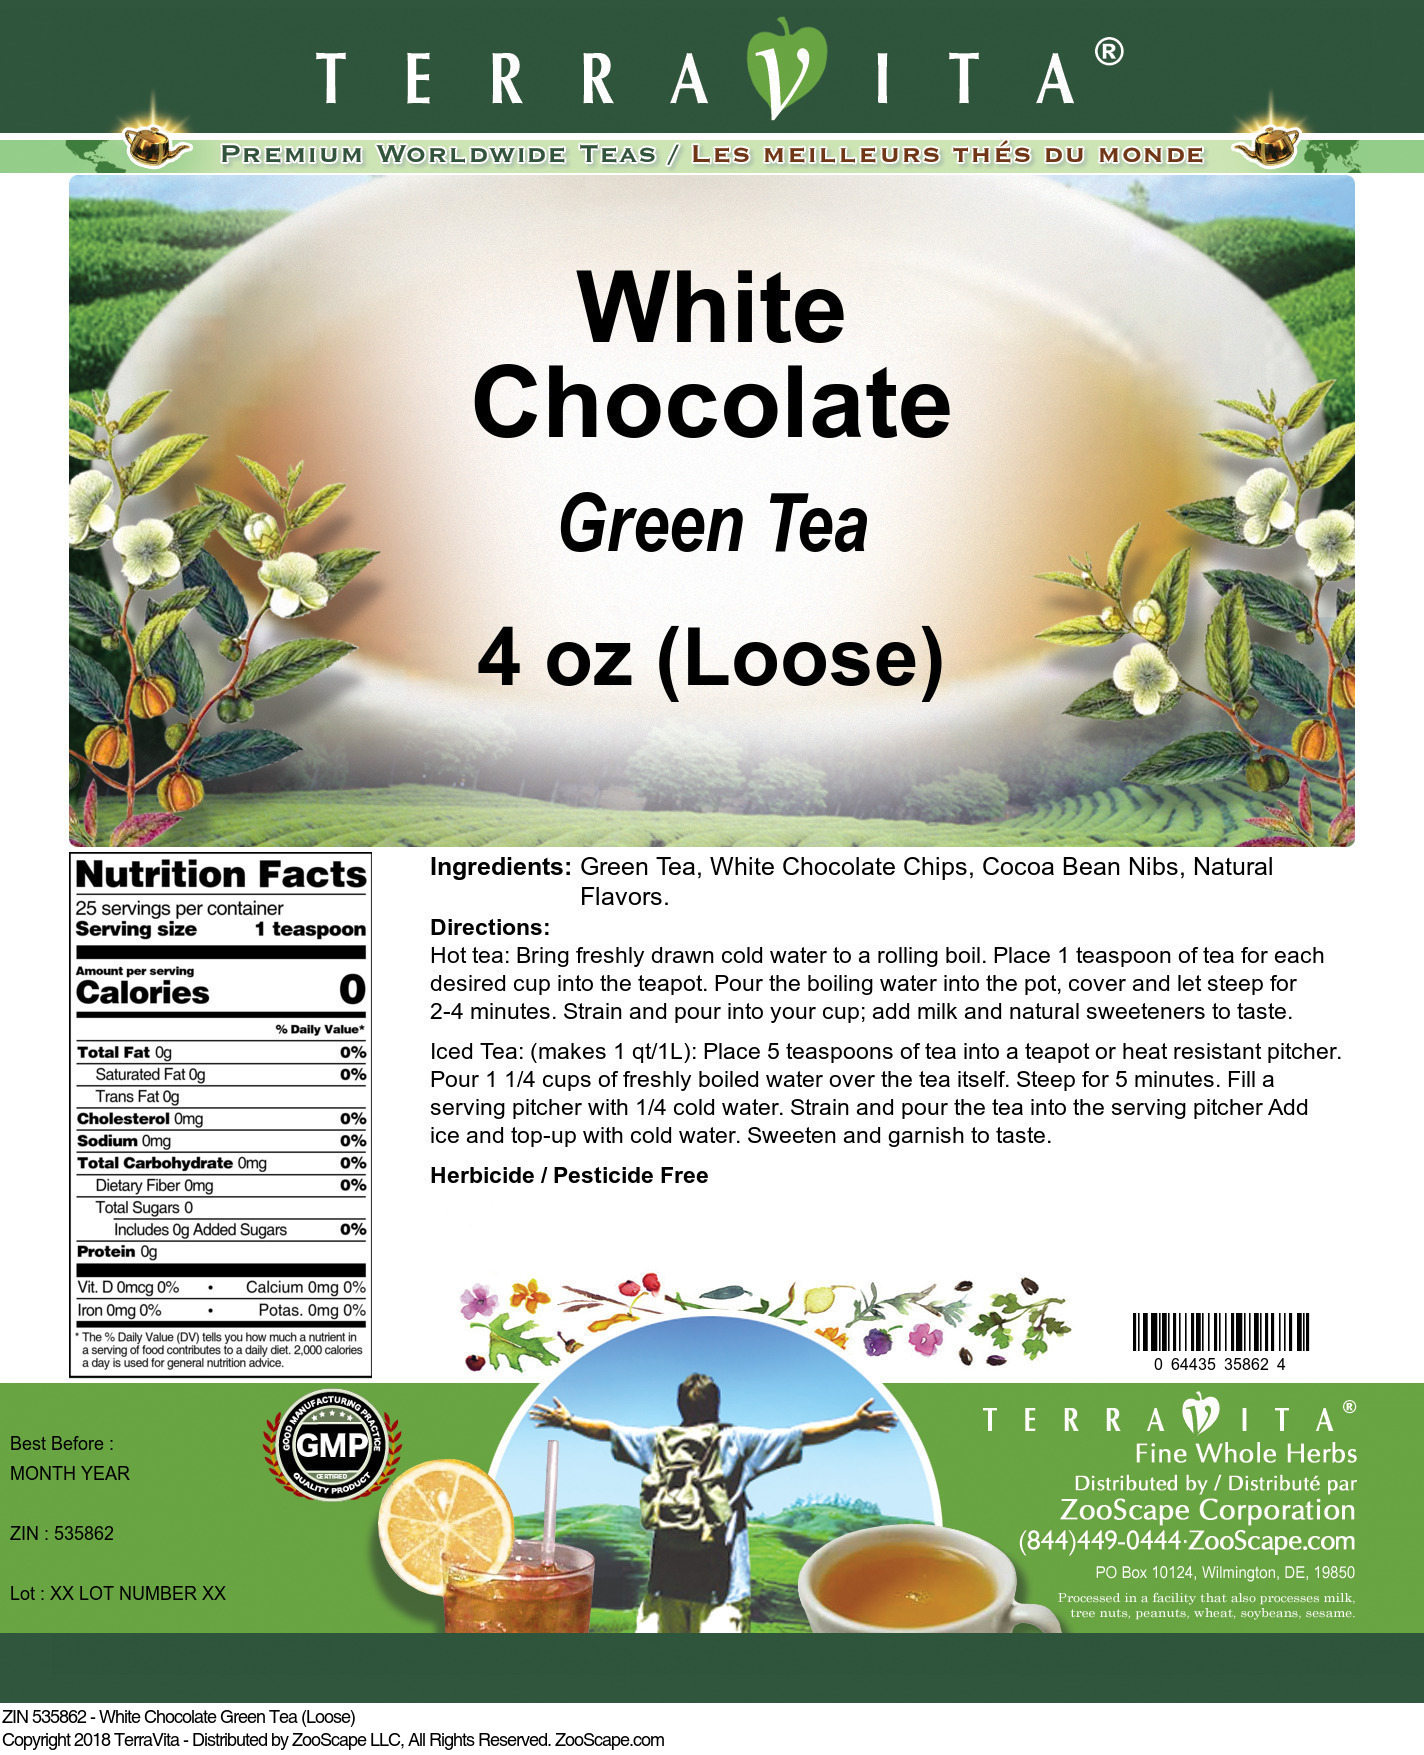 White Chocolate Green Tea (Loose) - Label